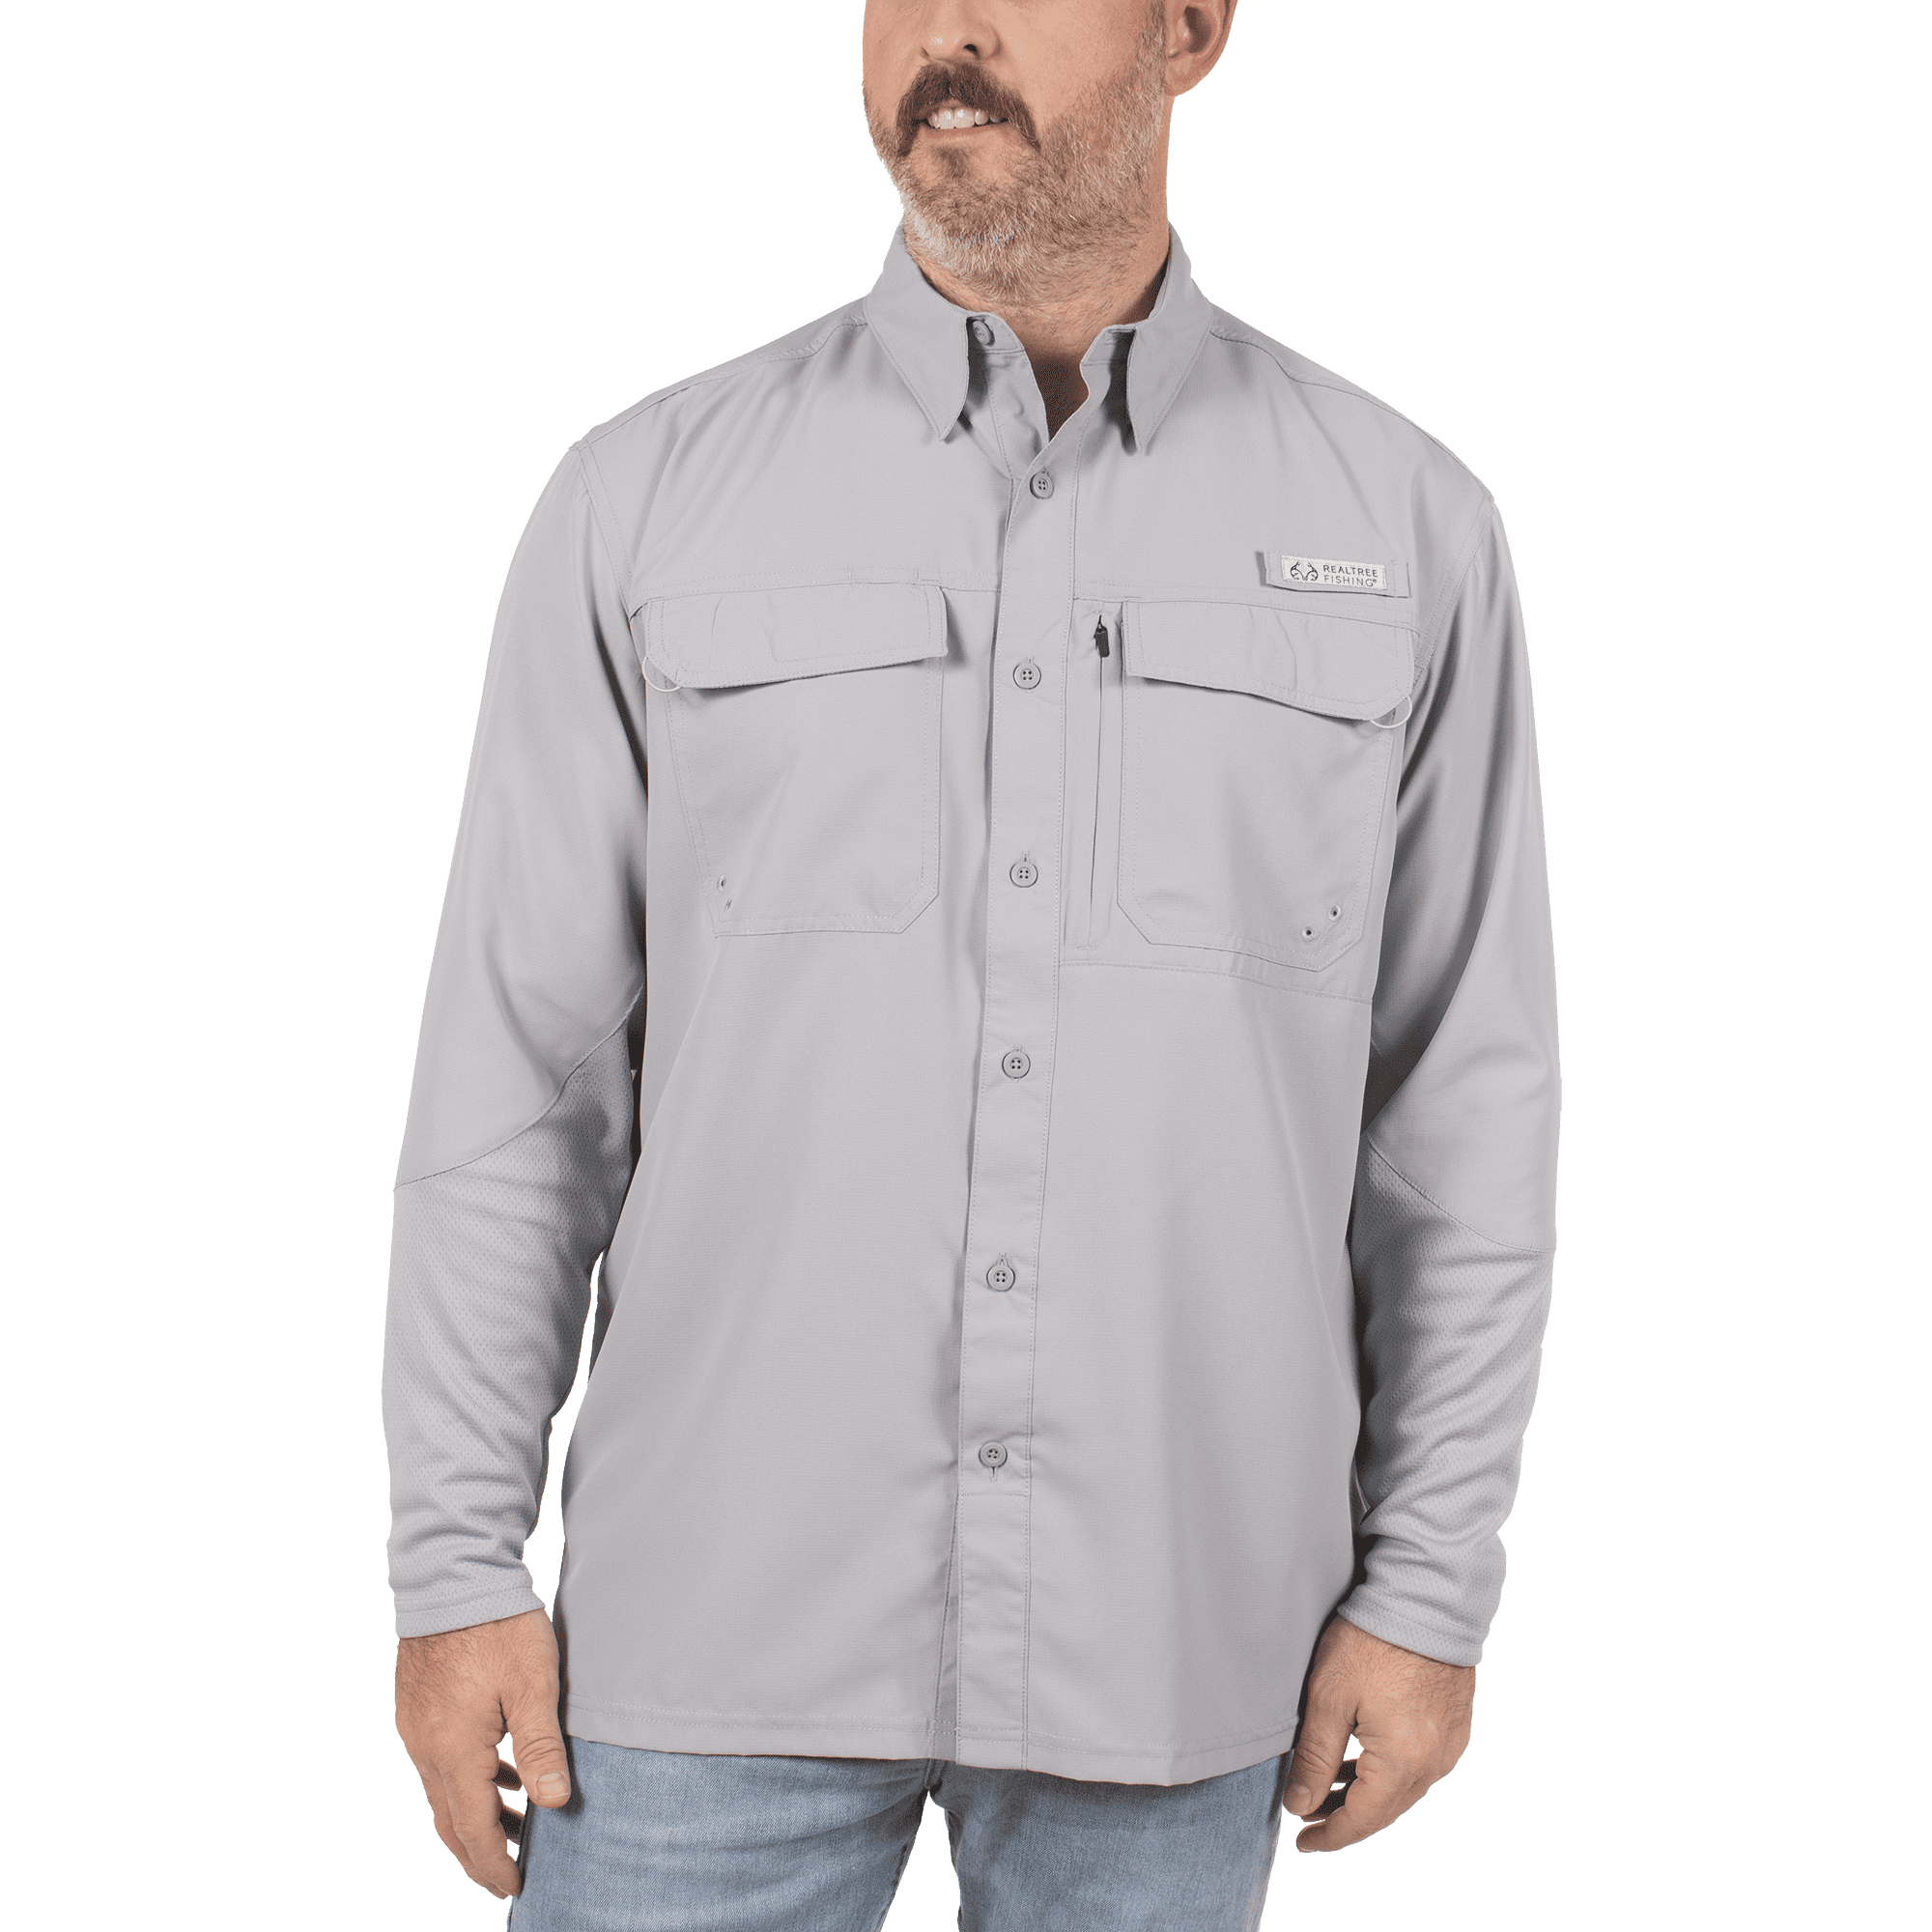 Realtree Men's Long Sleeve Fishing Guide Shirt - Sleet Gray - L Each